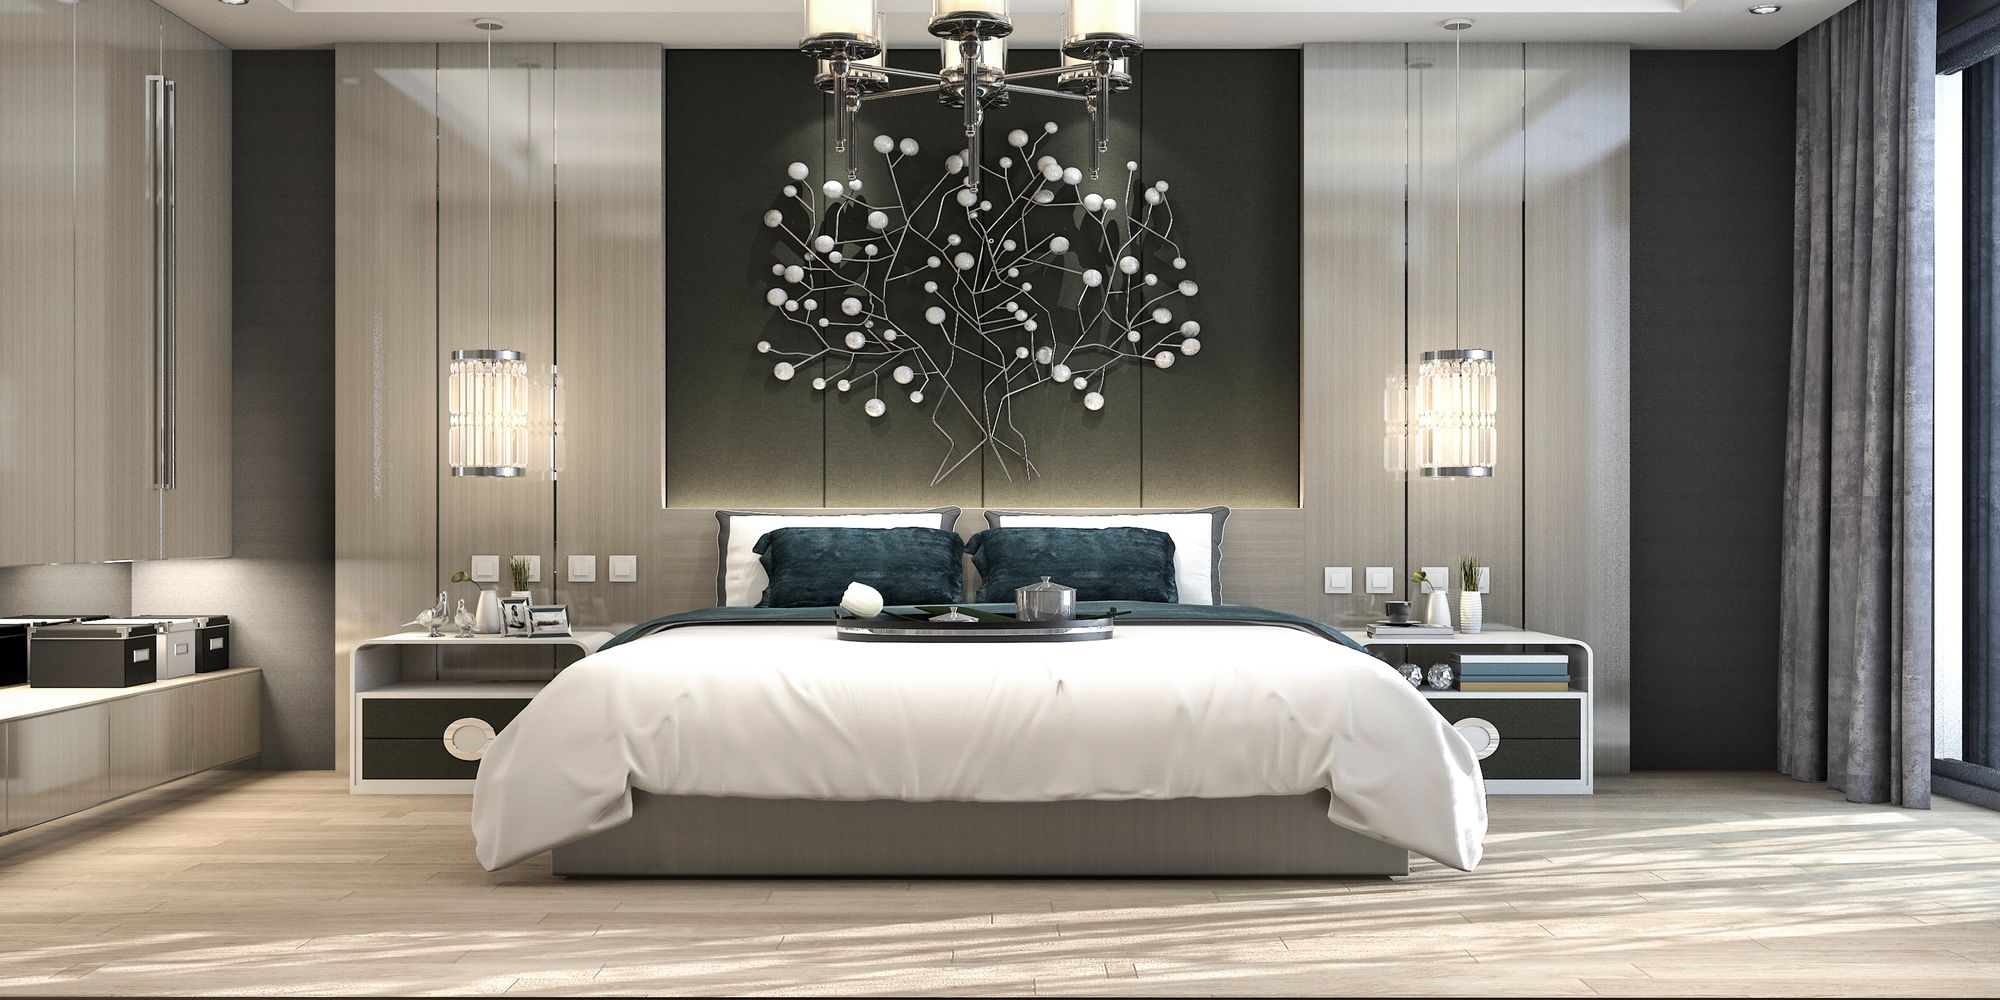 Luxury modern bedroom suite in hotel